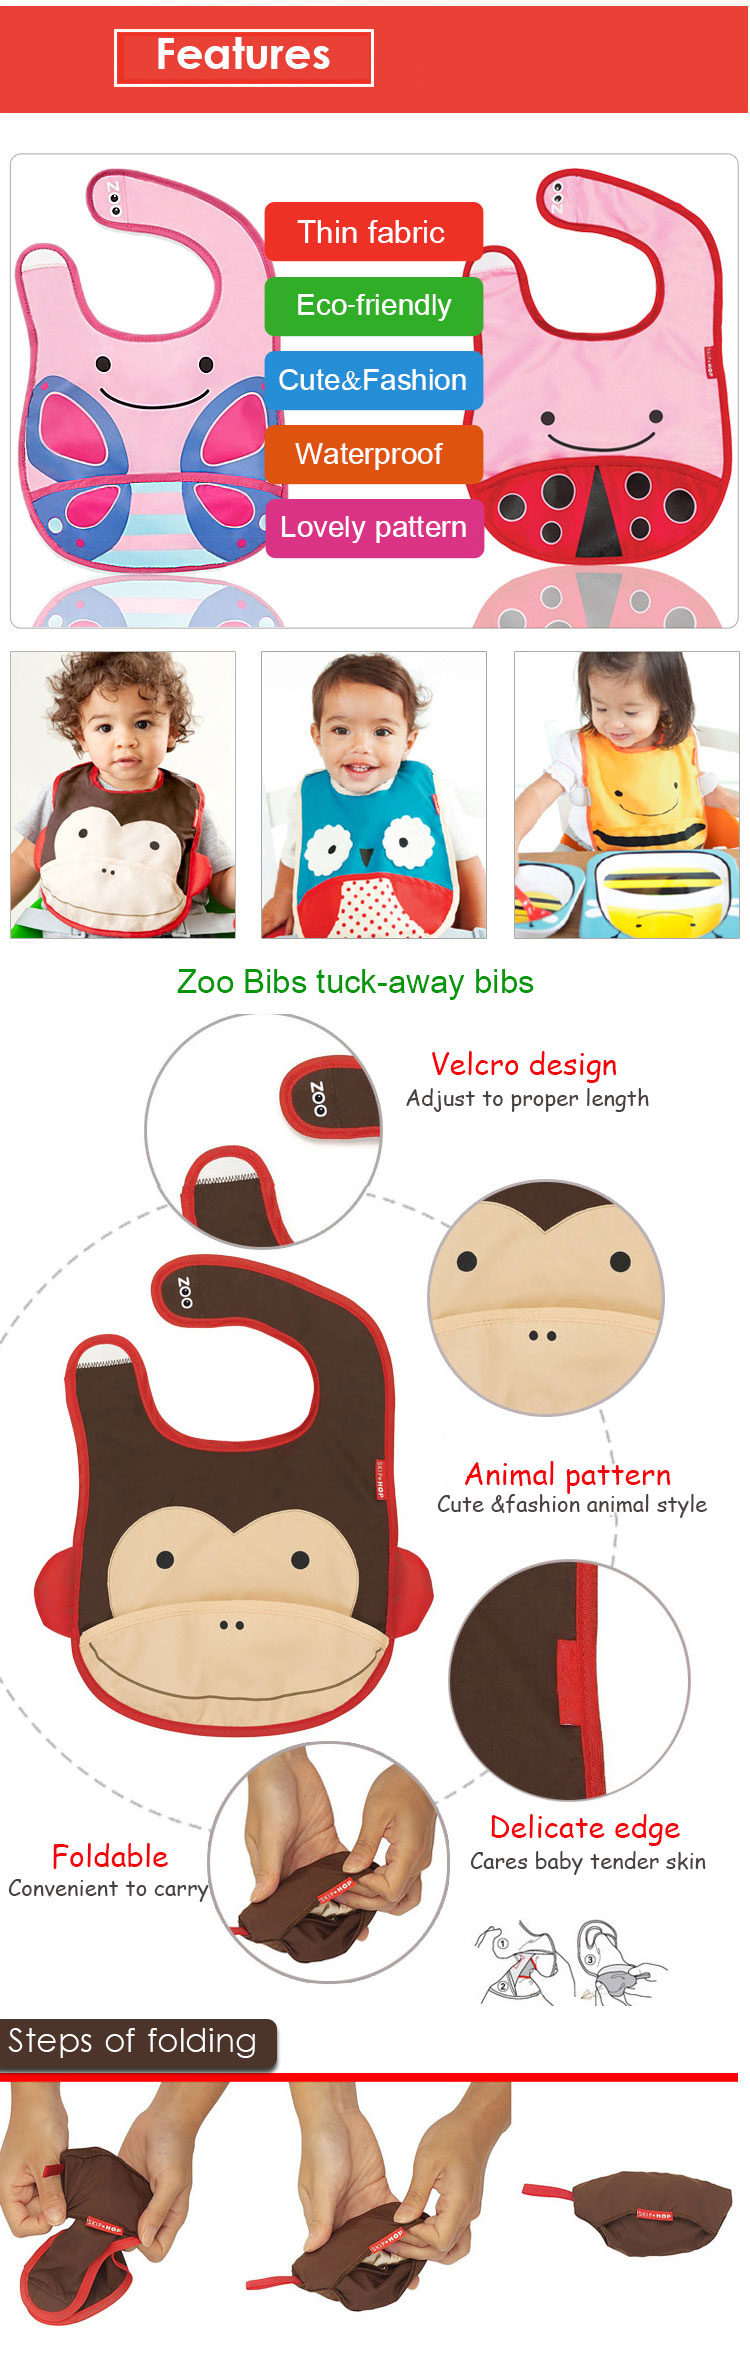 Cute-Cartoon-Animal-Baby-Infant-Waterproof-Bibs-Scarf-Feeding-Supplies-980642